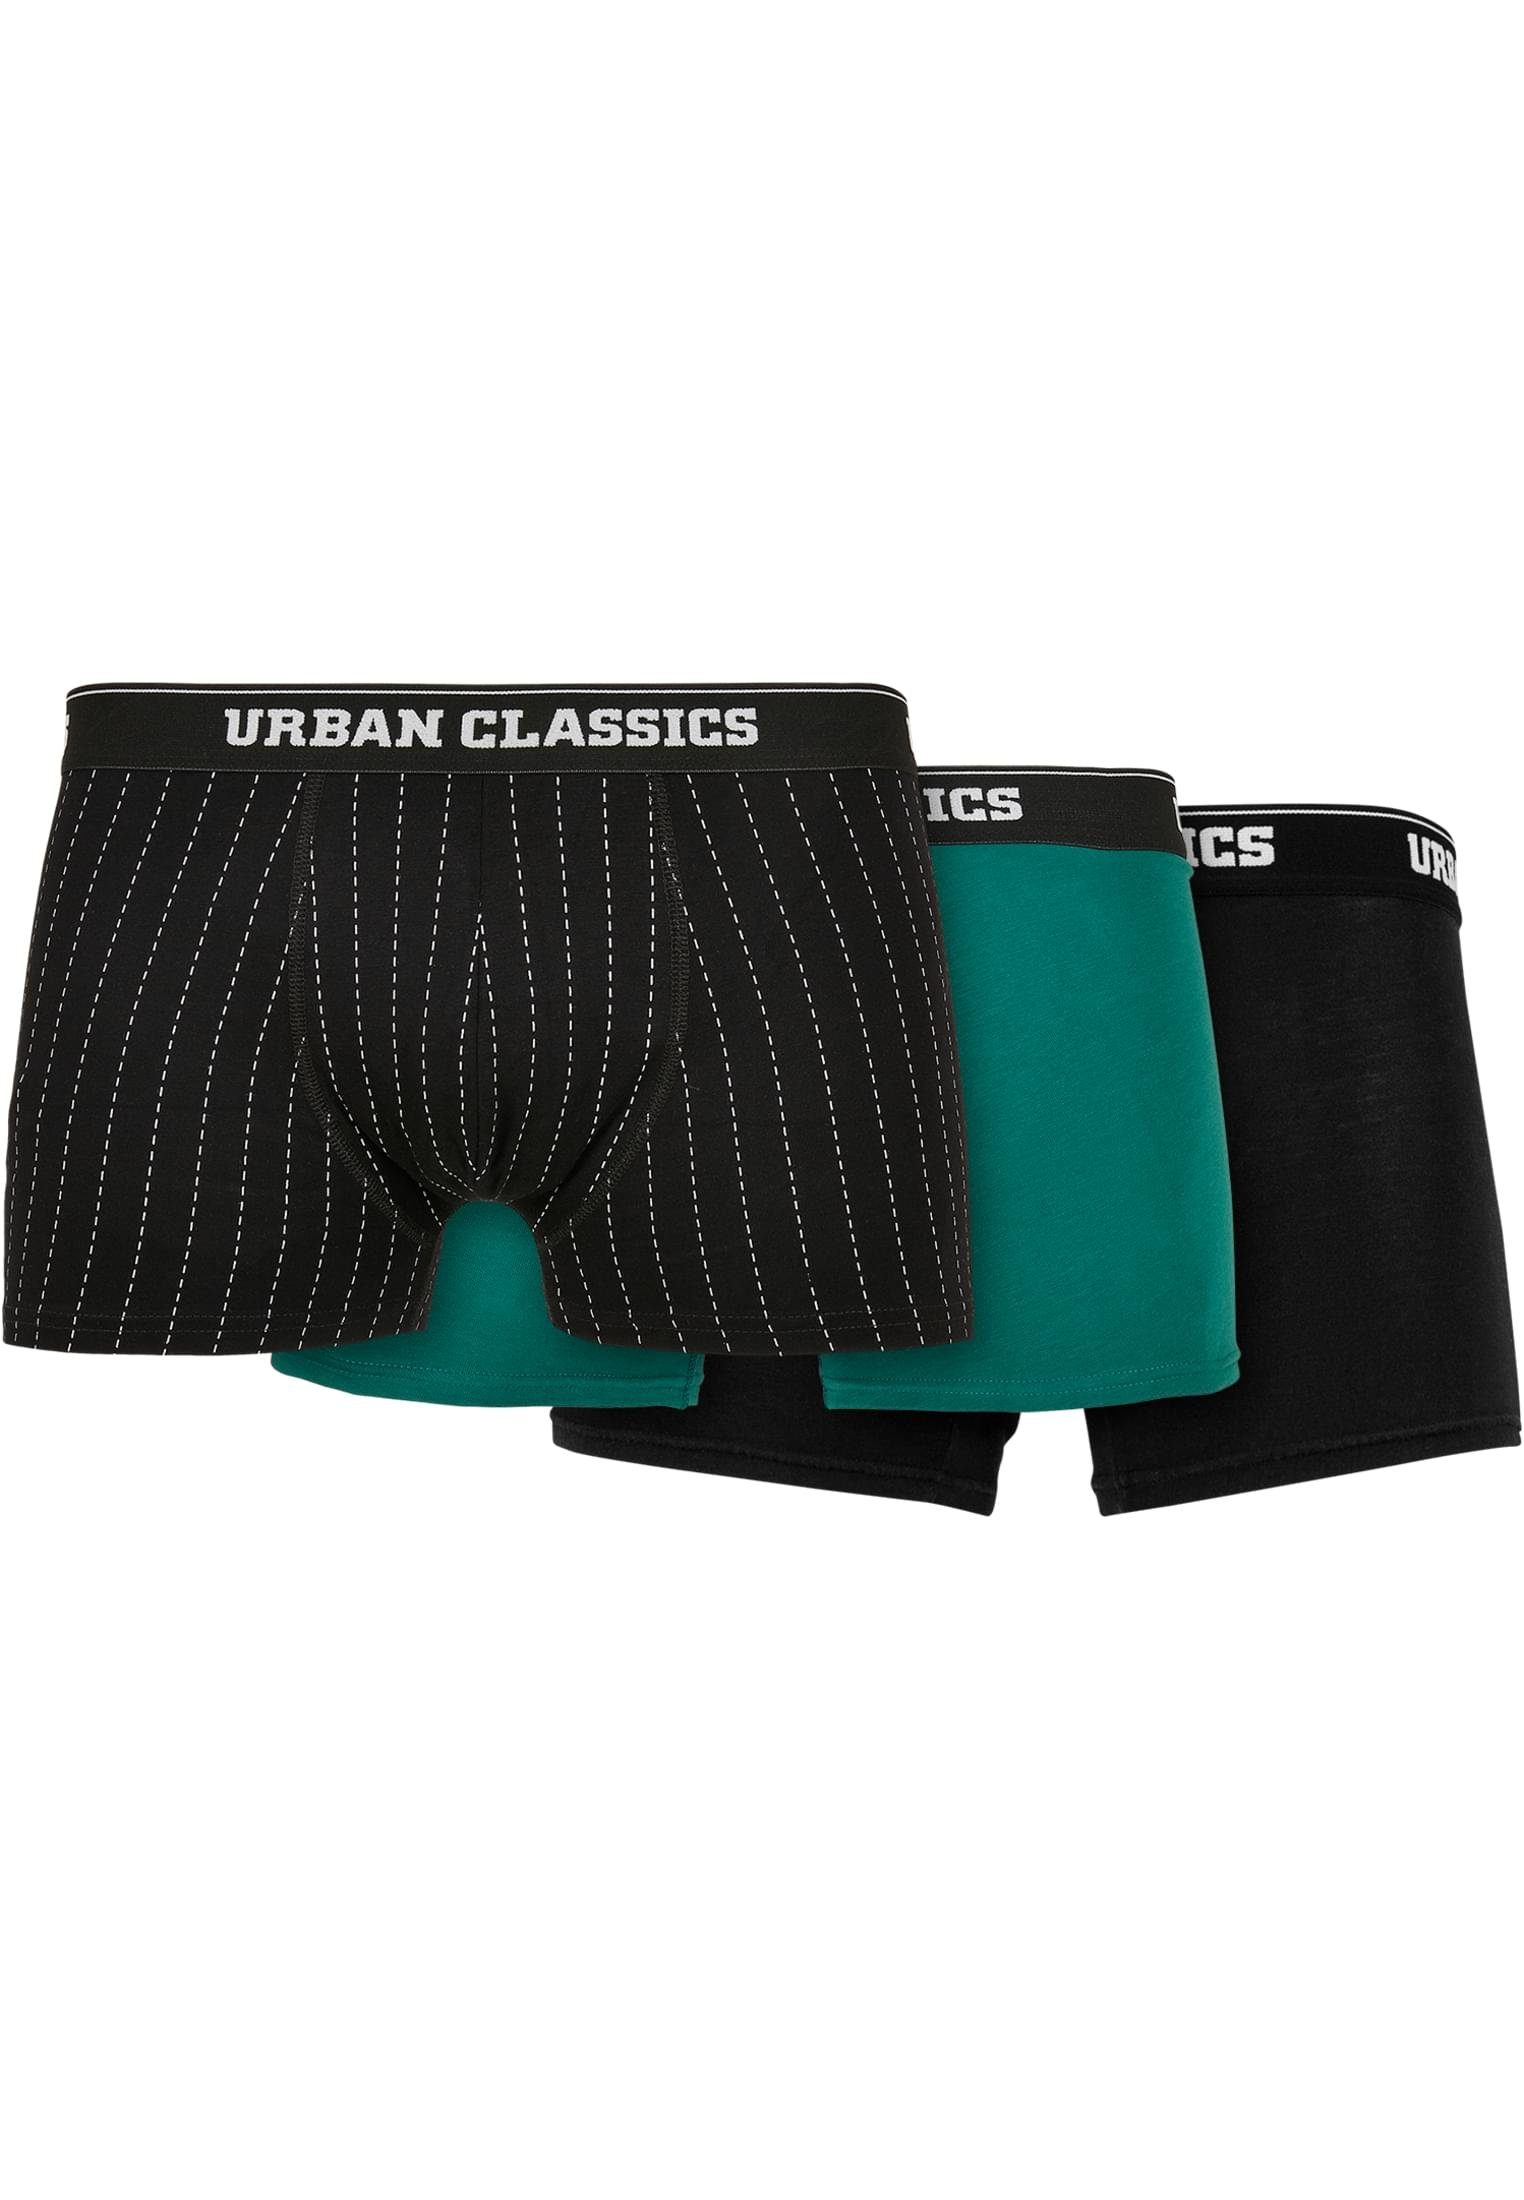 Organic CLASSICS Boxershorts Boxer treegreen aop (1-St) Shorts URBAN pinstripe 3-Pack Herren black